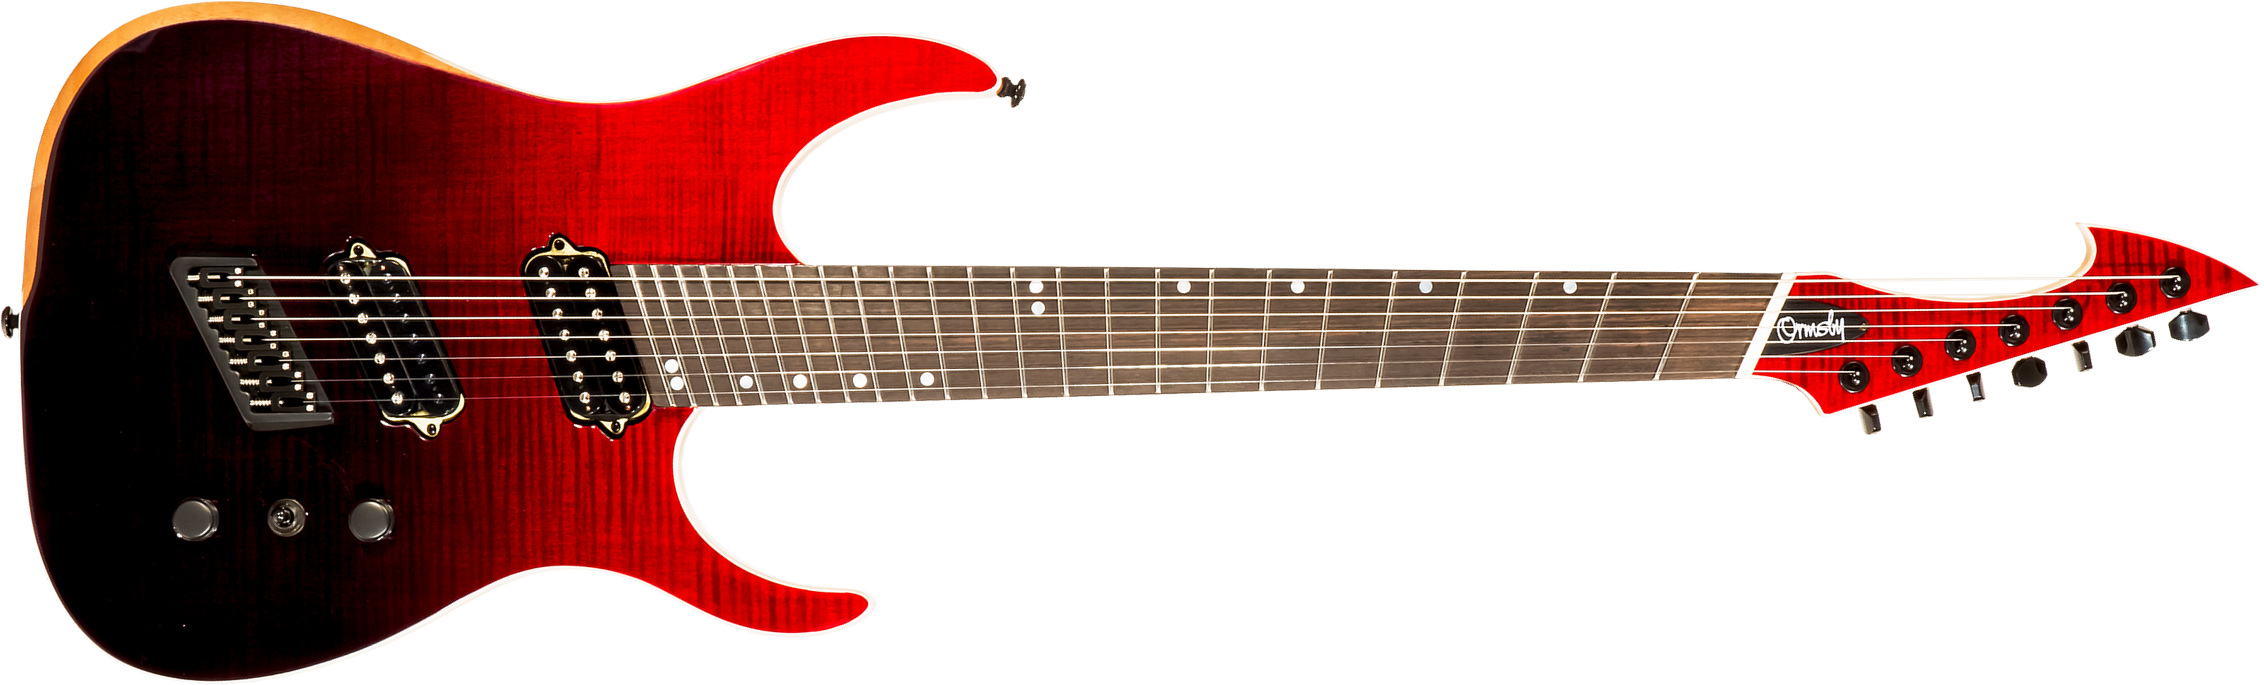 Ormsby Hype Gtr 7c Ltd Run 16 Multiscale 2h Ht Eb #gtr07630 - Blood Bath - Multi-scale gitaar - Main picture